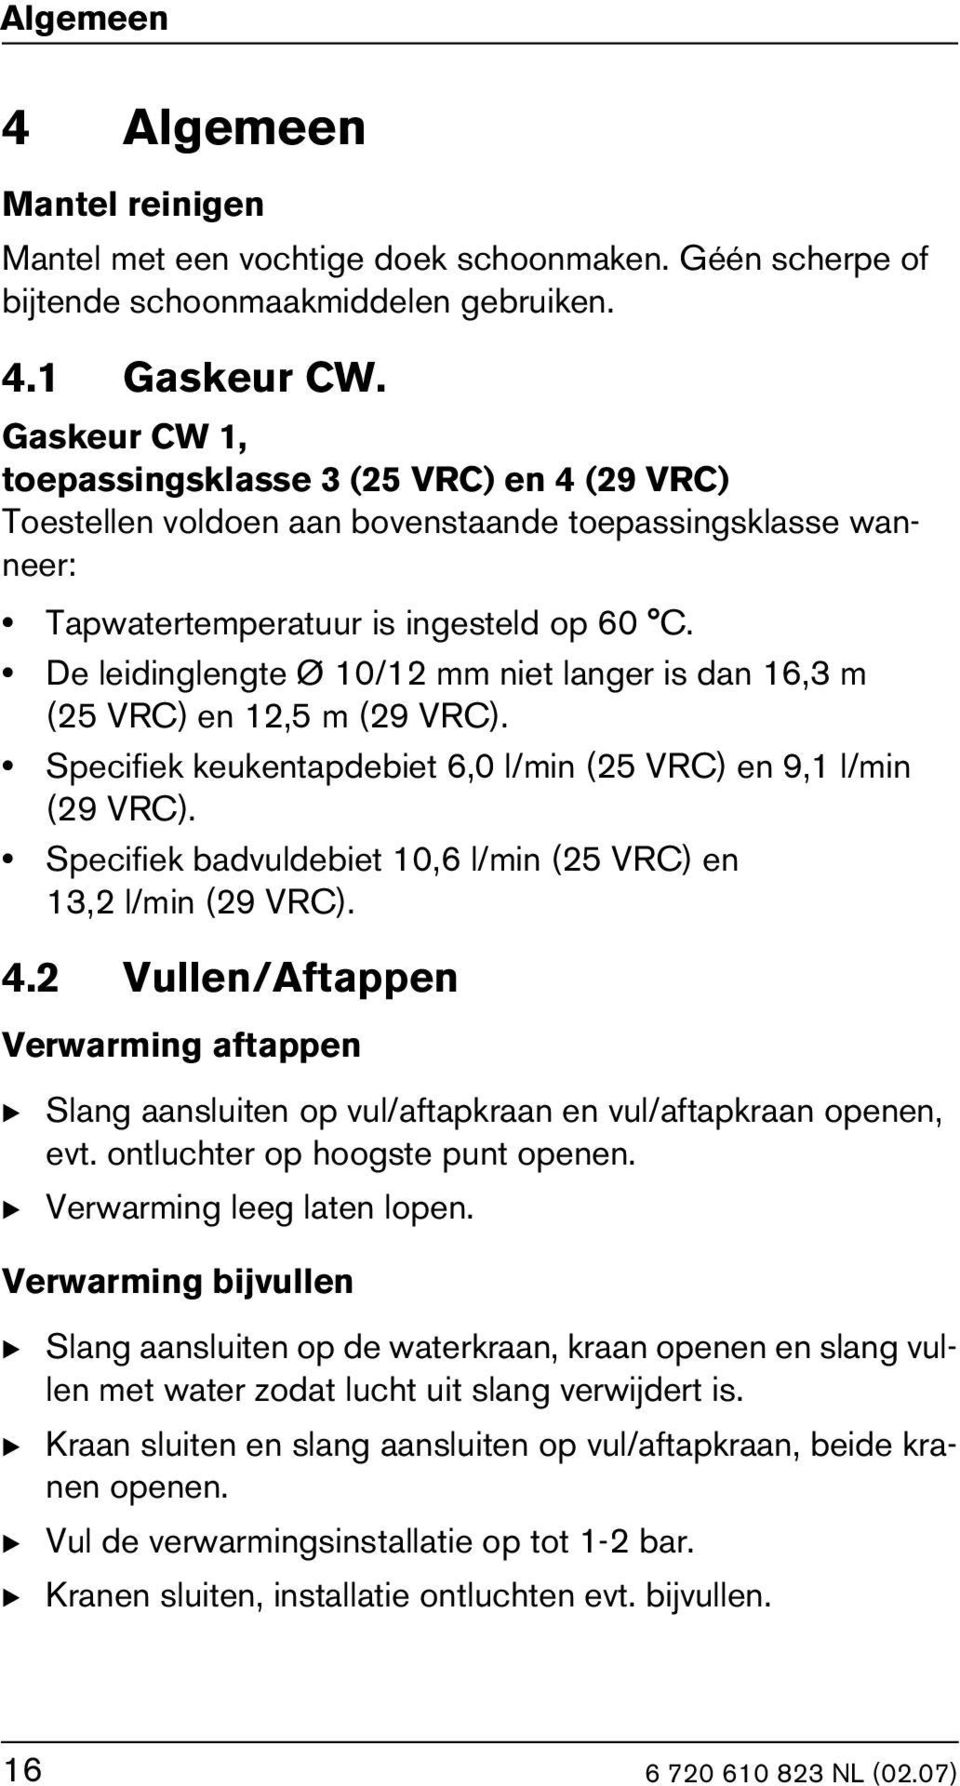 De leidinglengte Ø 10/12 mm niet langer is dan 16,3 m (25 VRC) en 12,5 m (29 VRC). Specifiek keukentapdebiet 6,0 l/min (25 VRC) en 9,1 l/min (29 VRC).